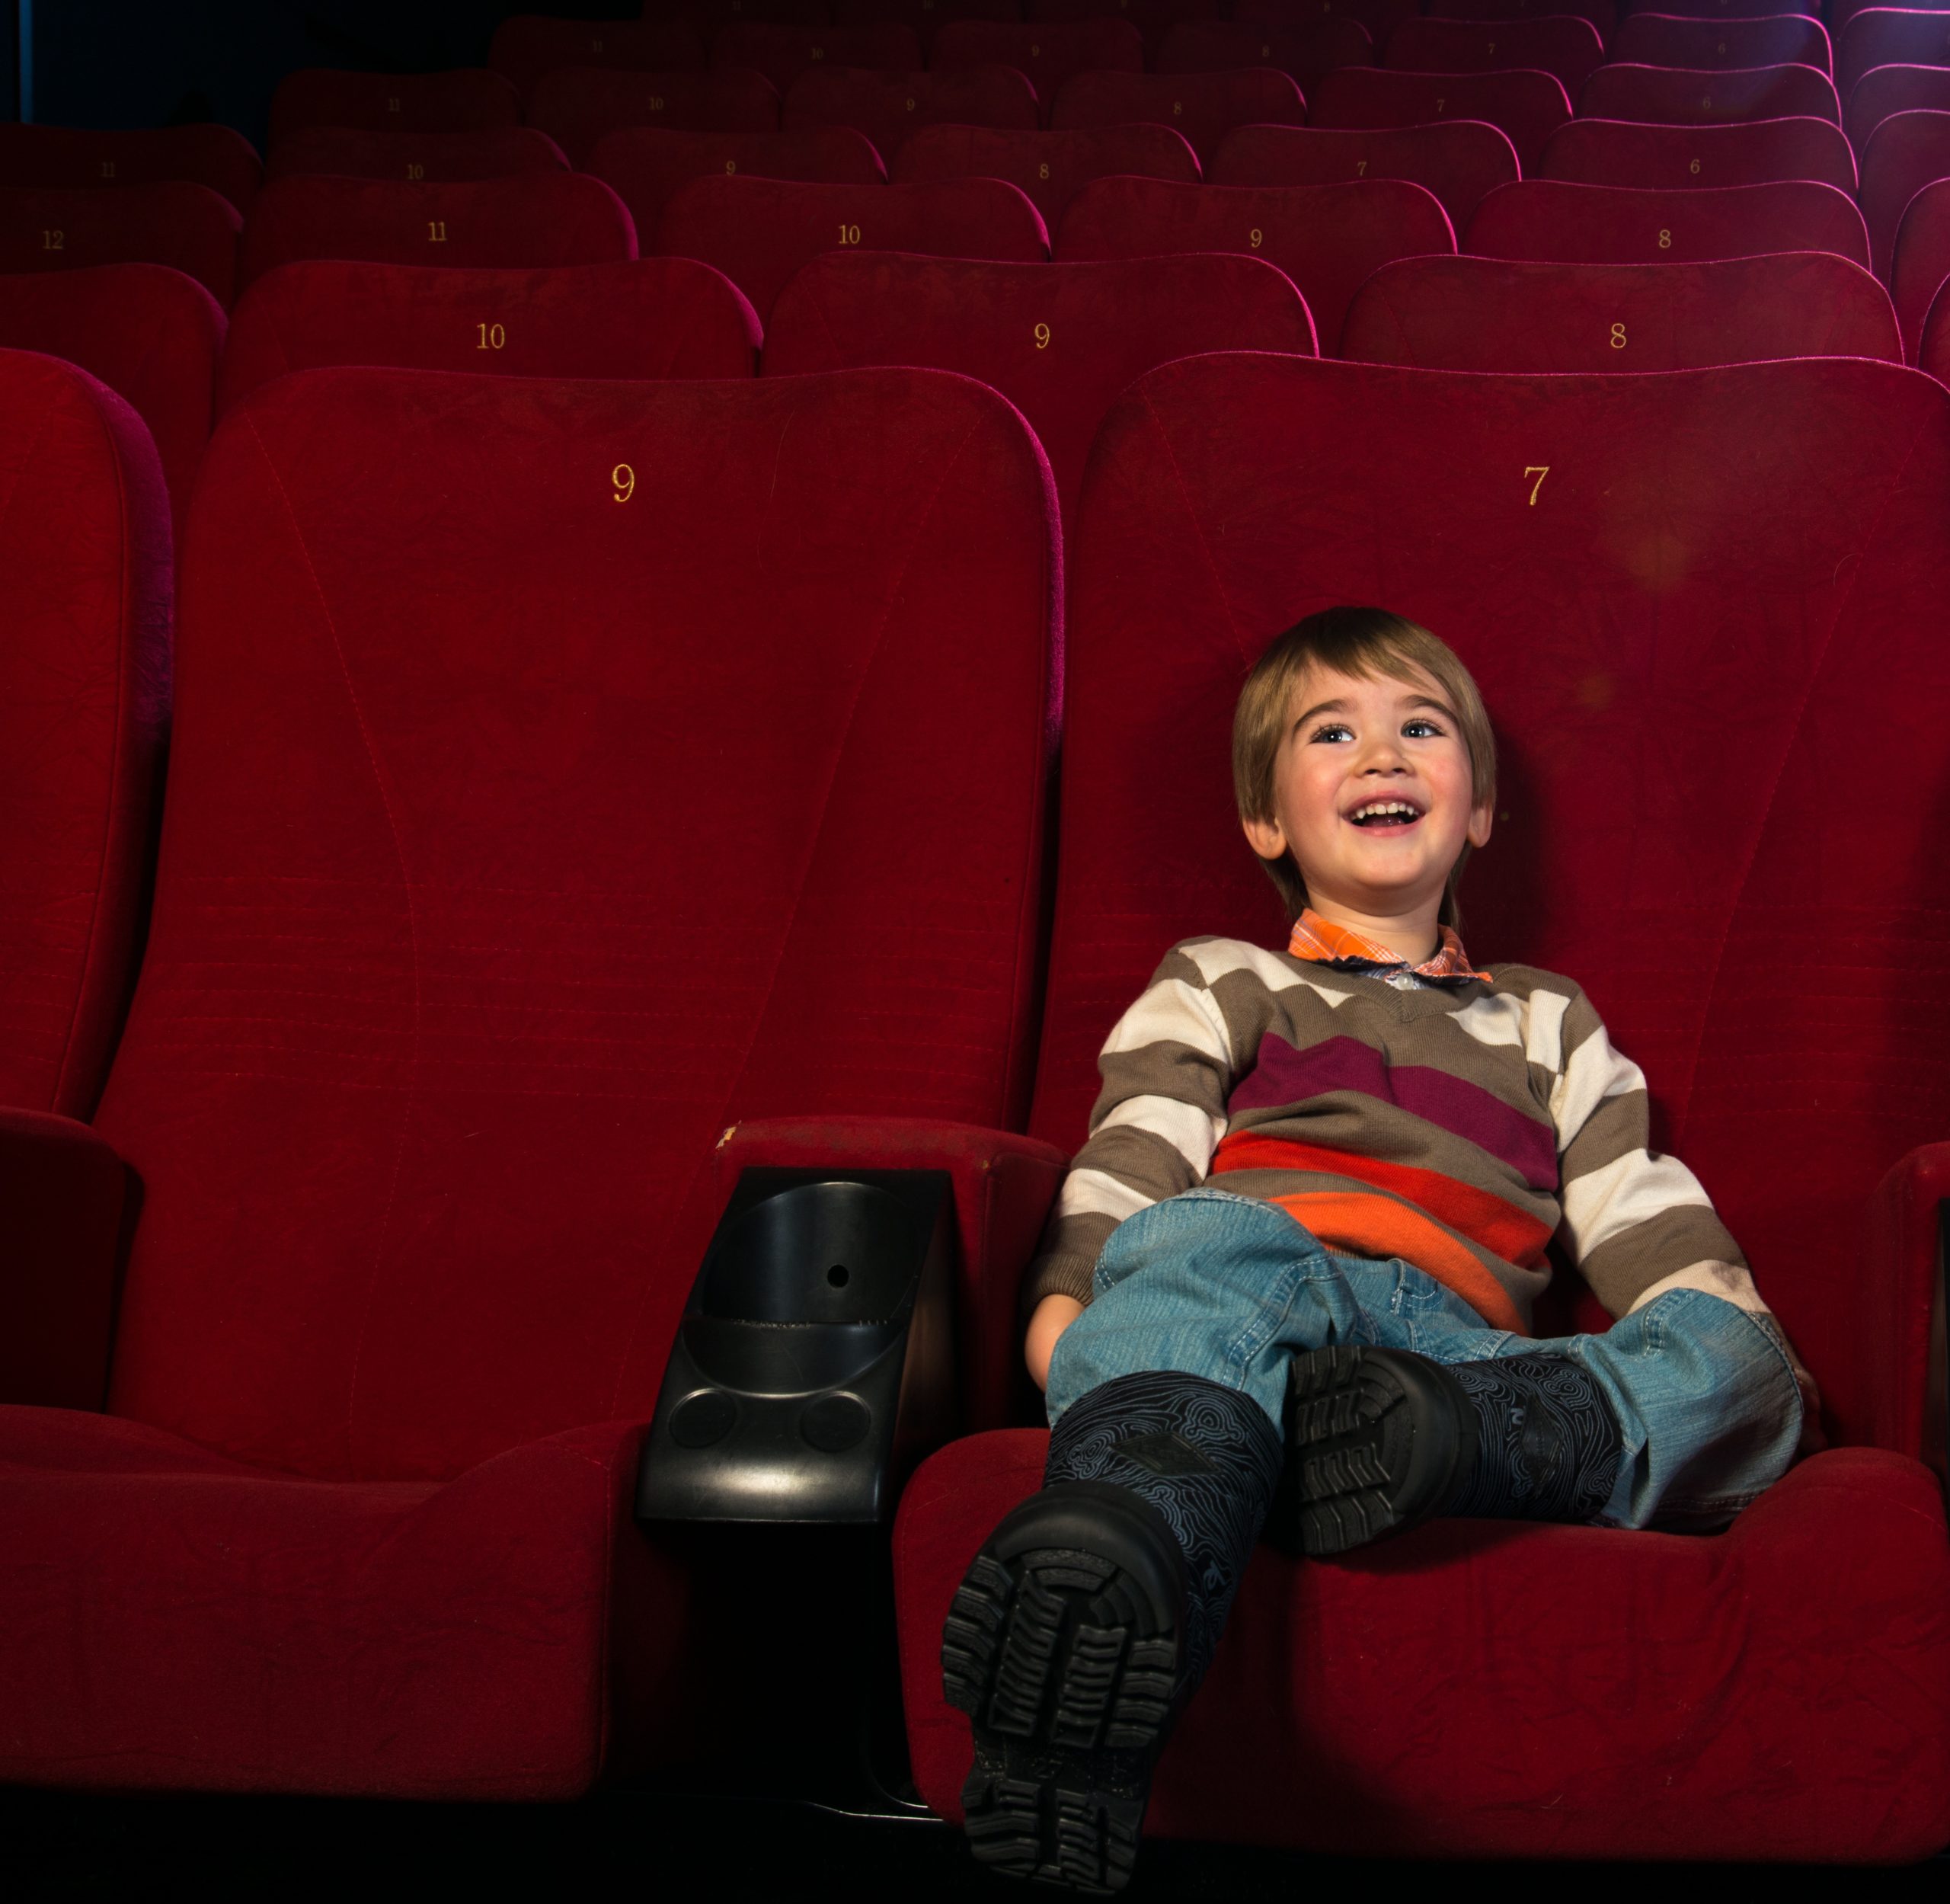 Smiling little boy watching movie in a cinema